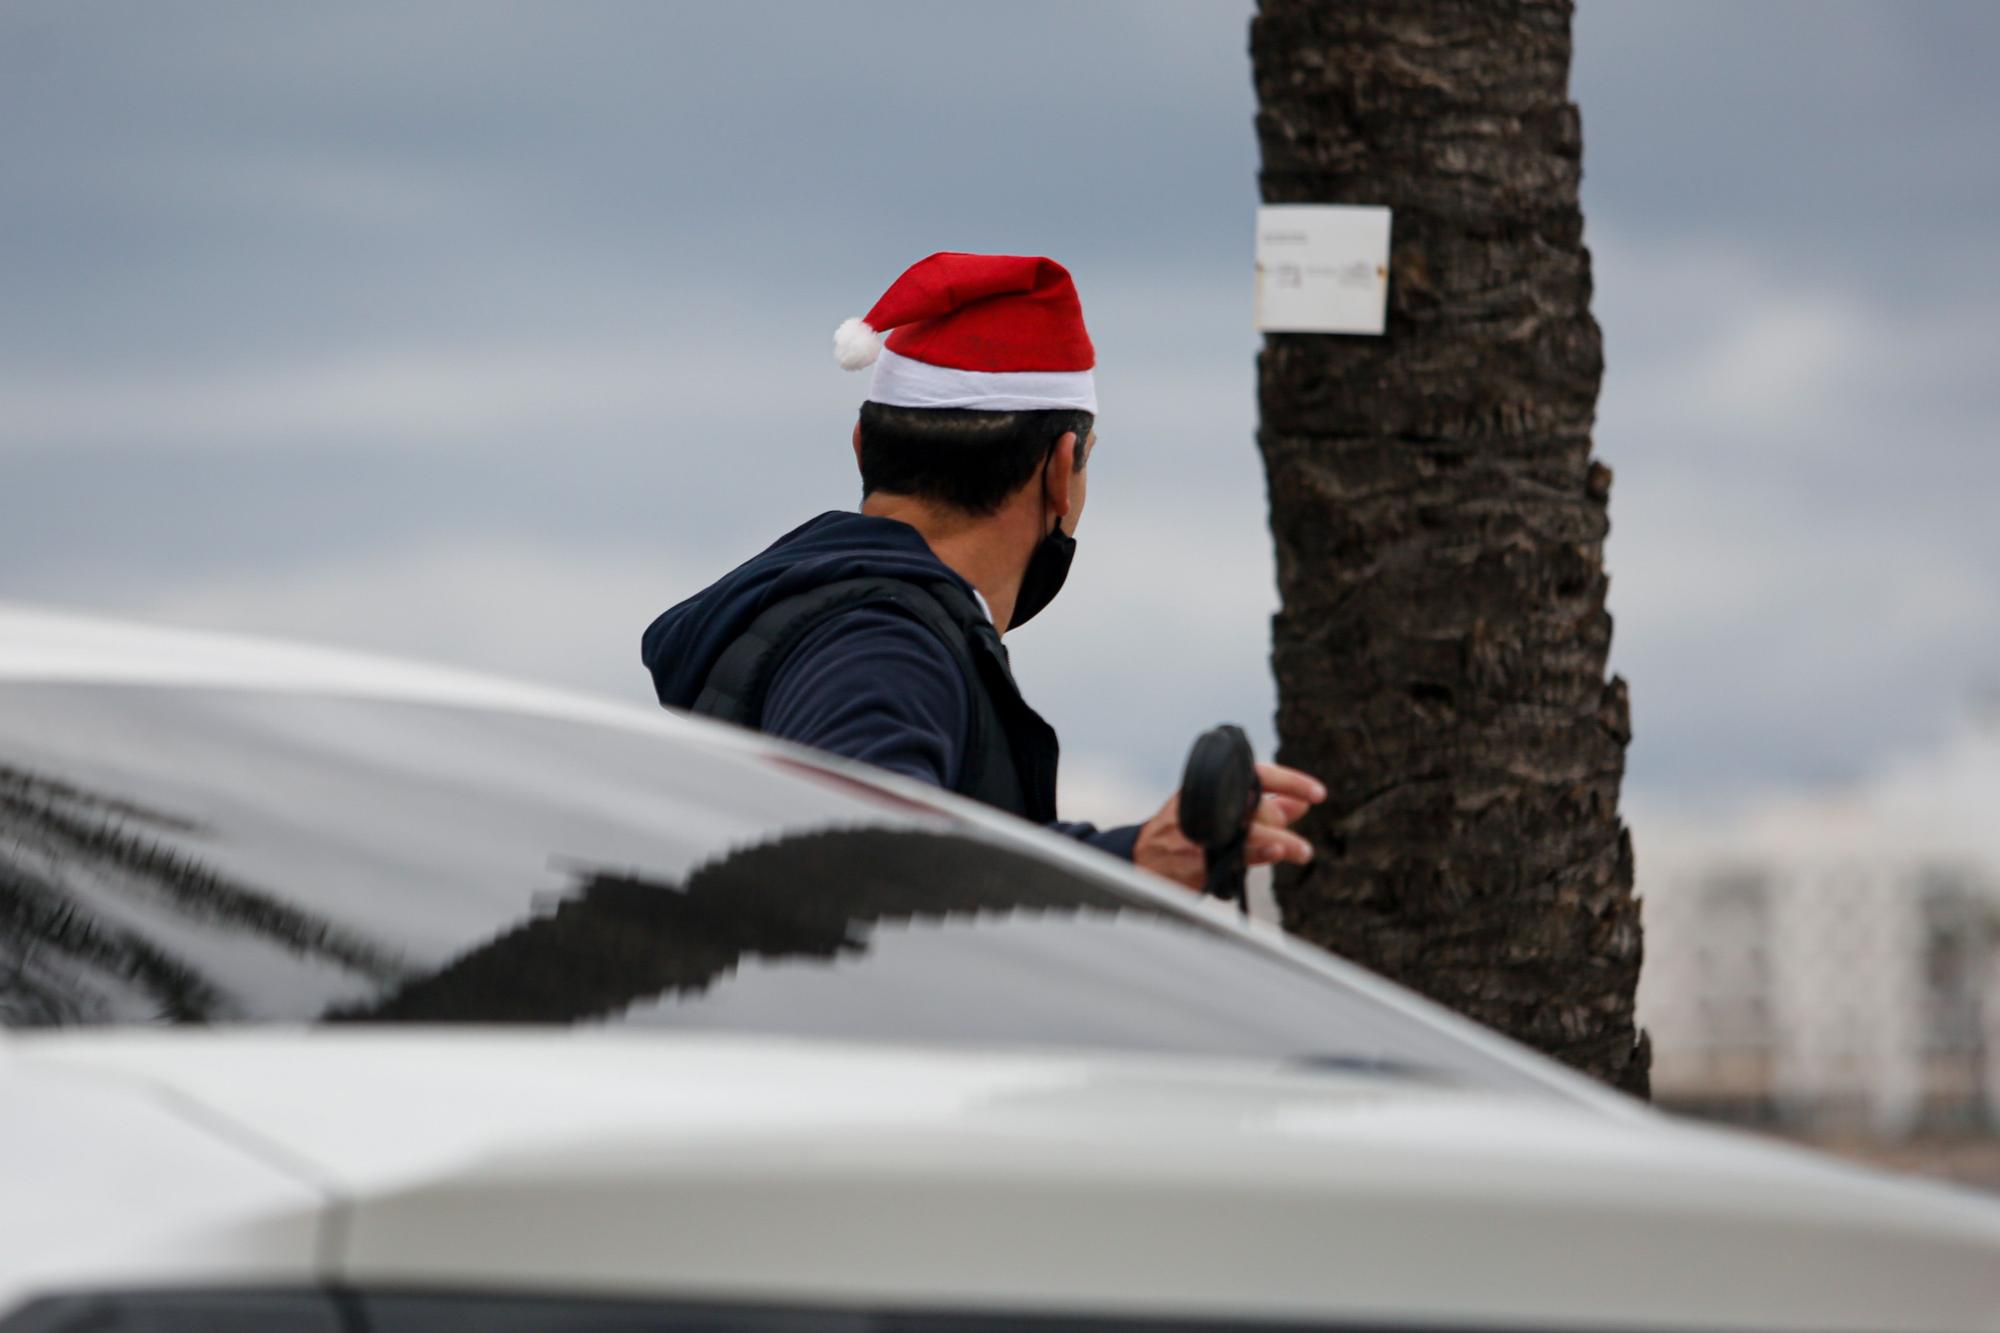 II Gincana Christmas Race en Santa Eulària